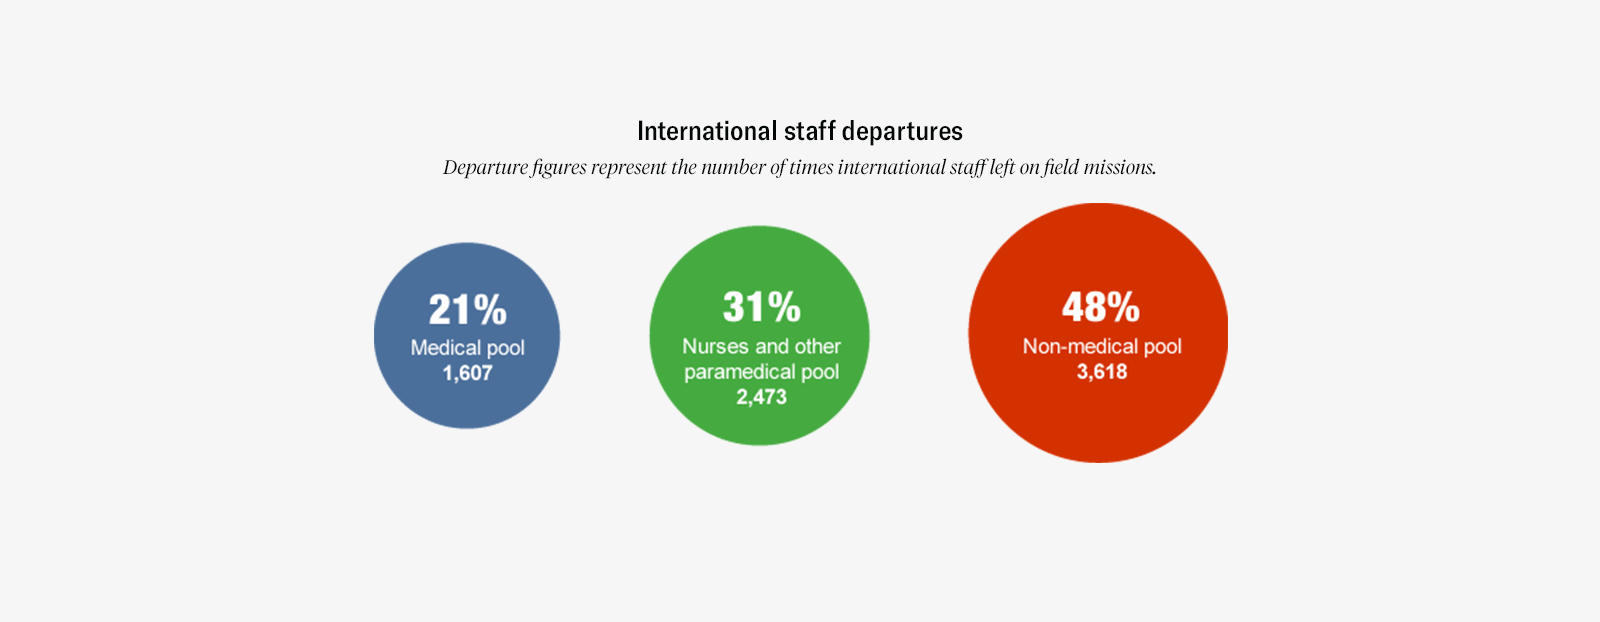 International staff departures IAR 2016